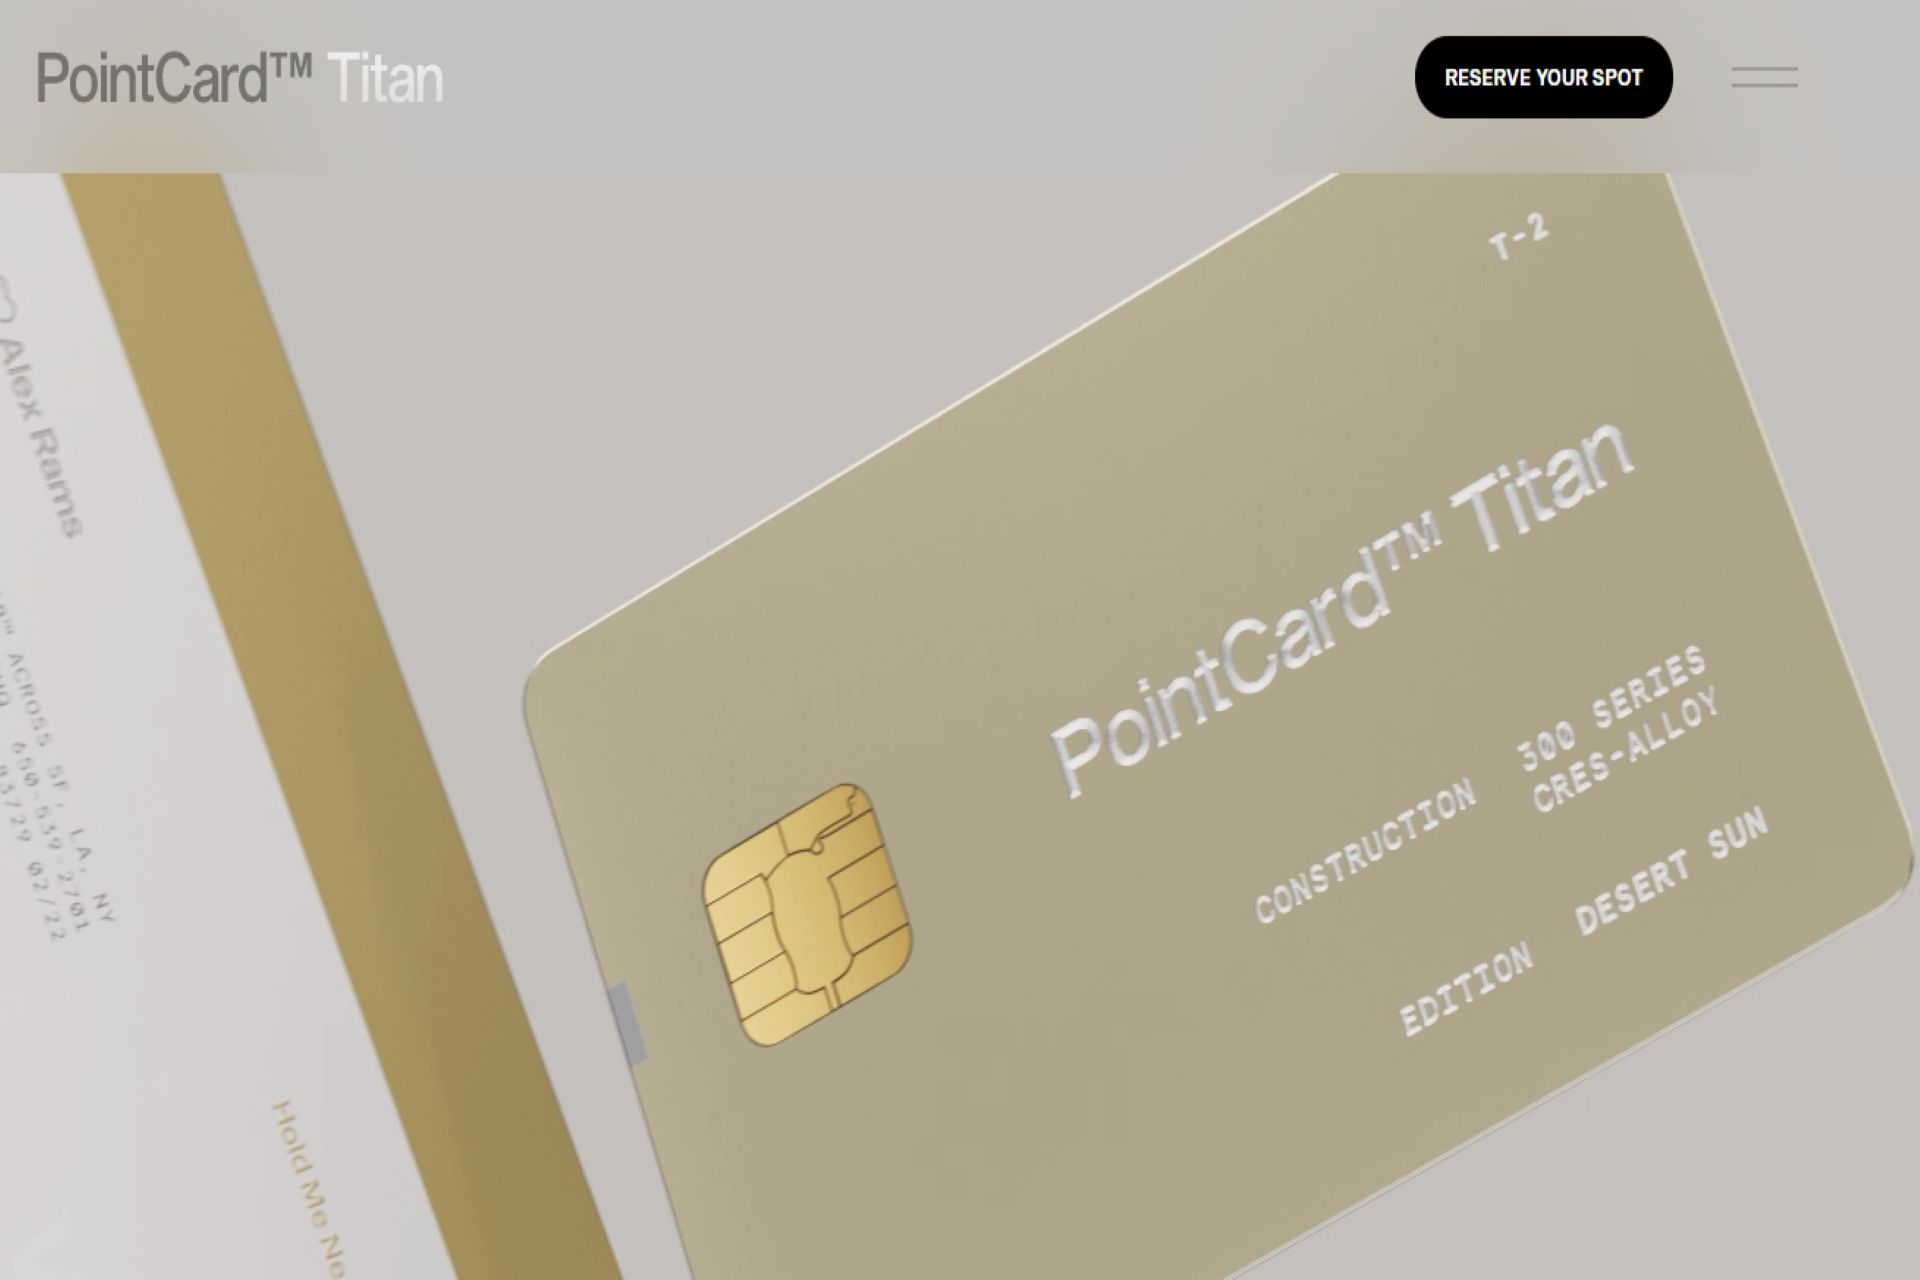 point-card-to-launch-399-pointcard-titan-debit-card